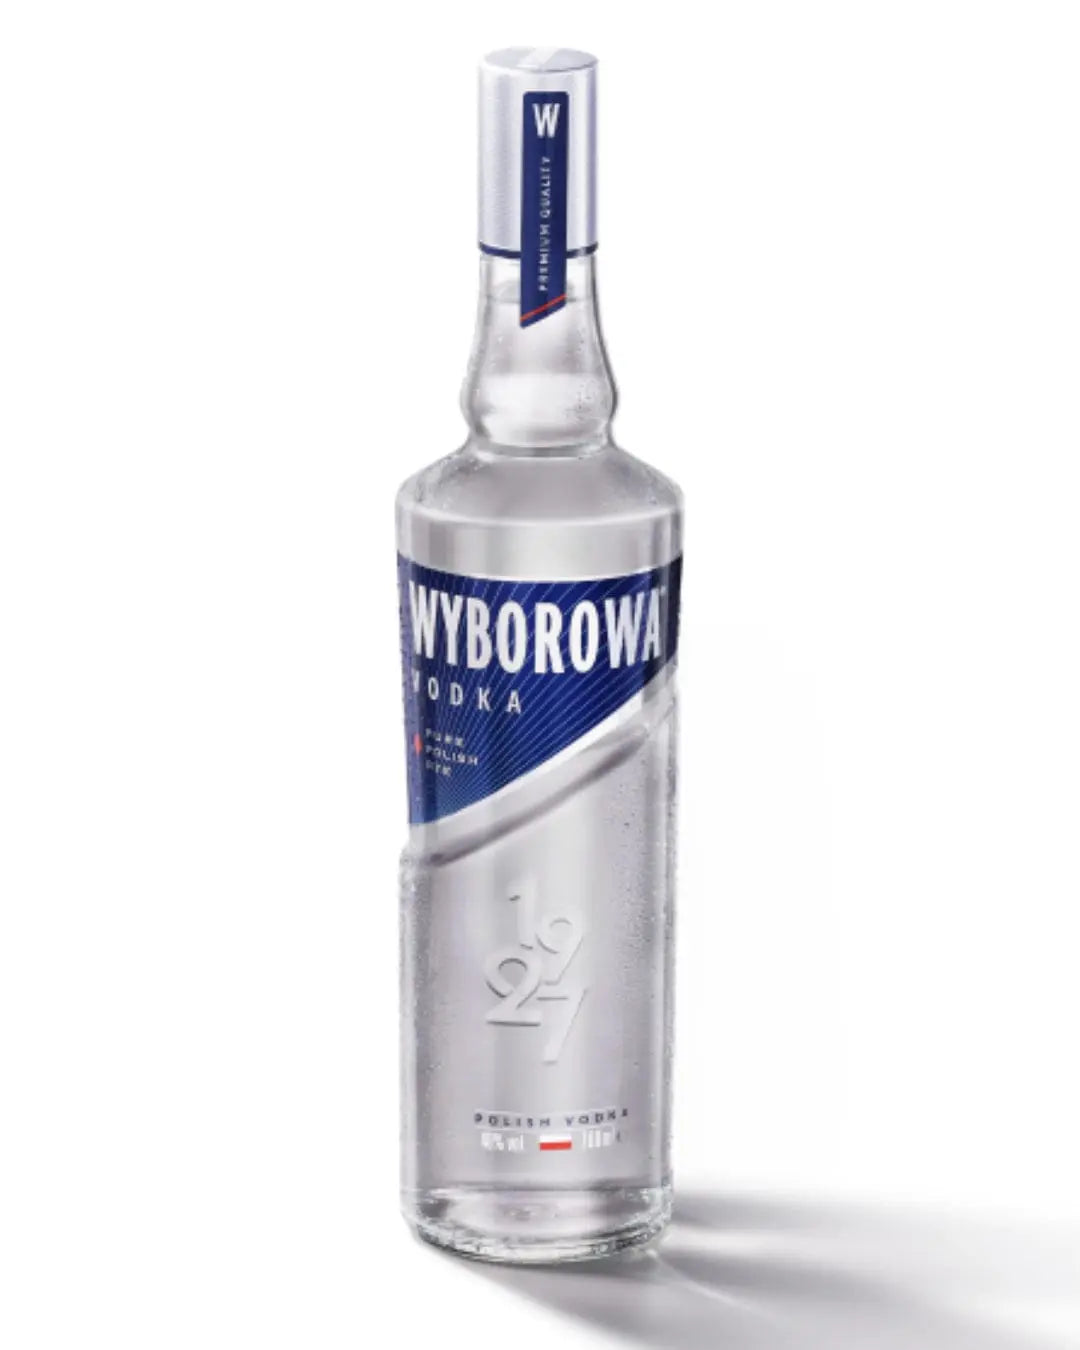 Wyborowa Original Vodka, 70 cl Vodka 705632072271